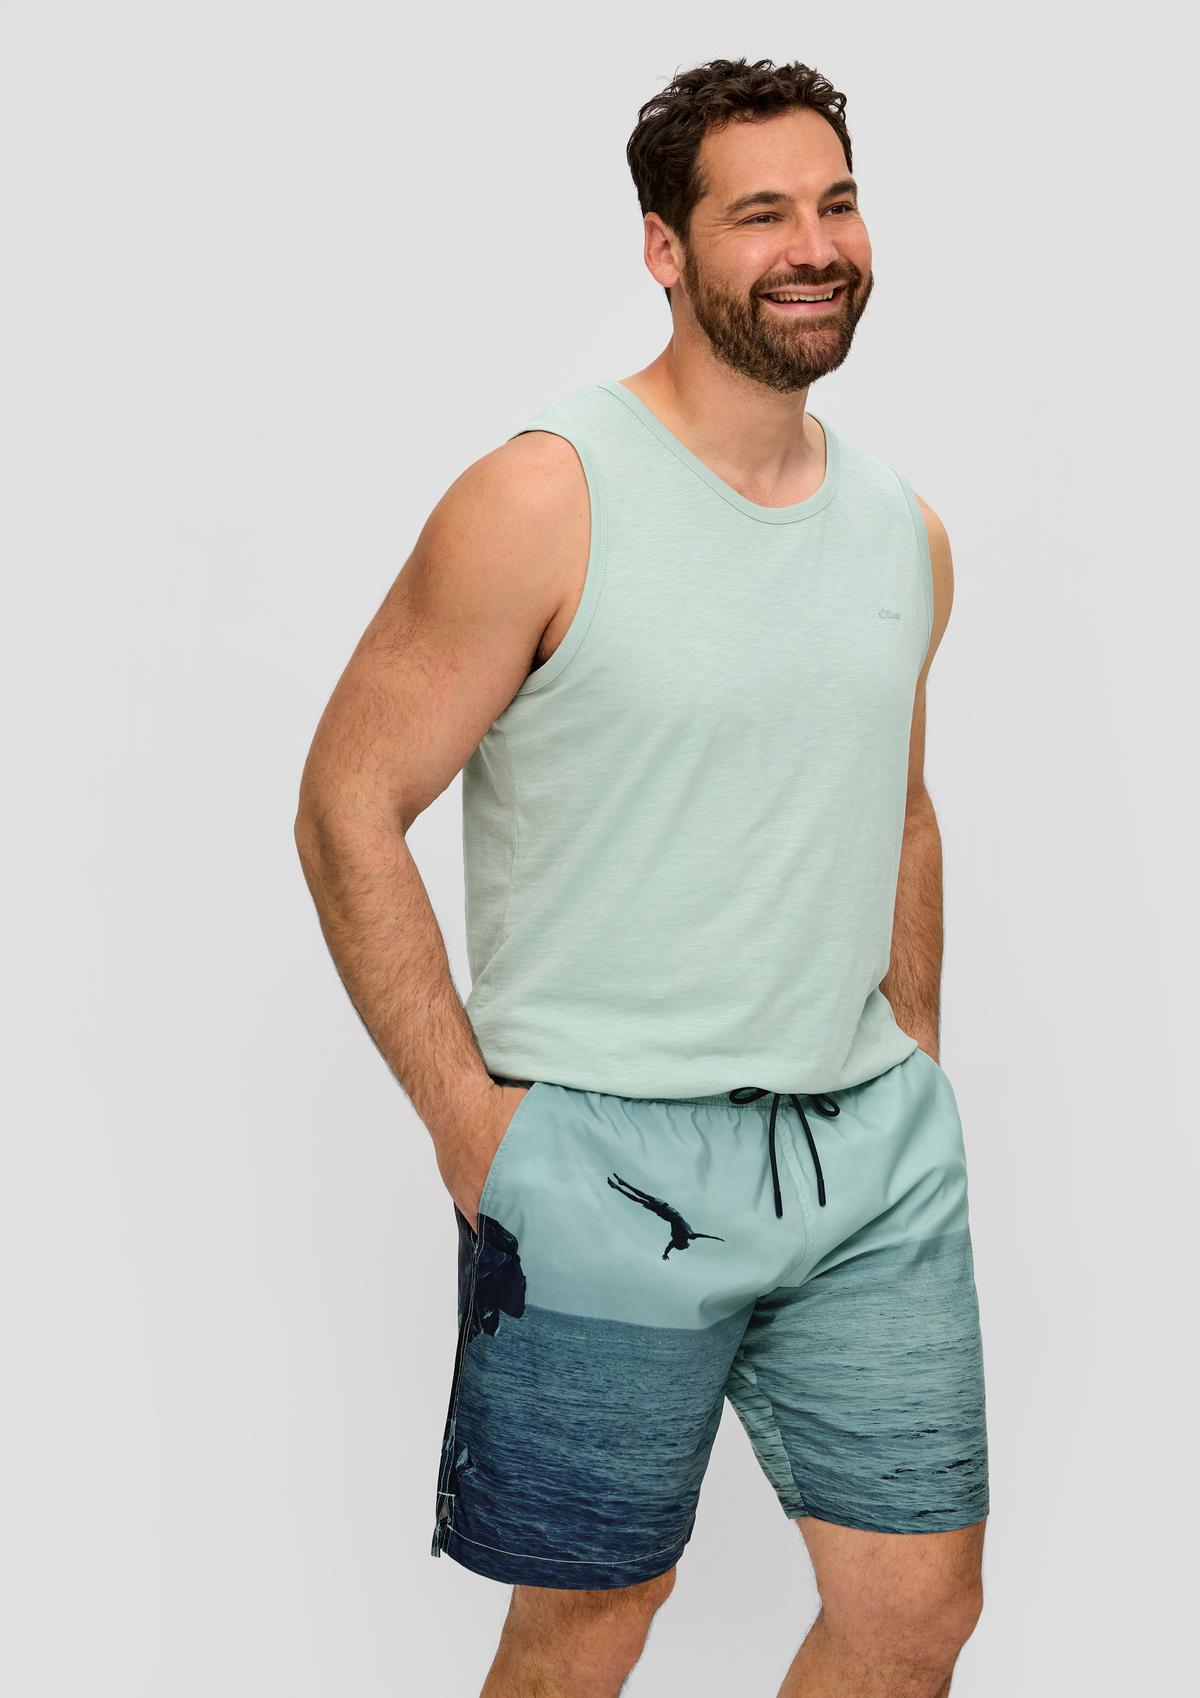 s.Oliver Swim shorts with slit pockets